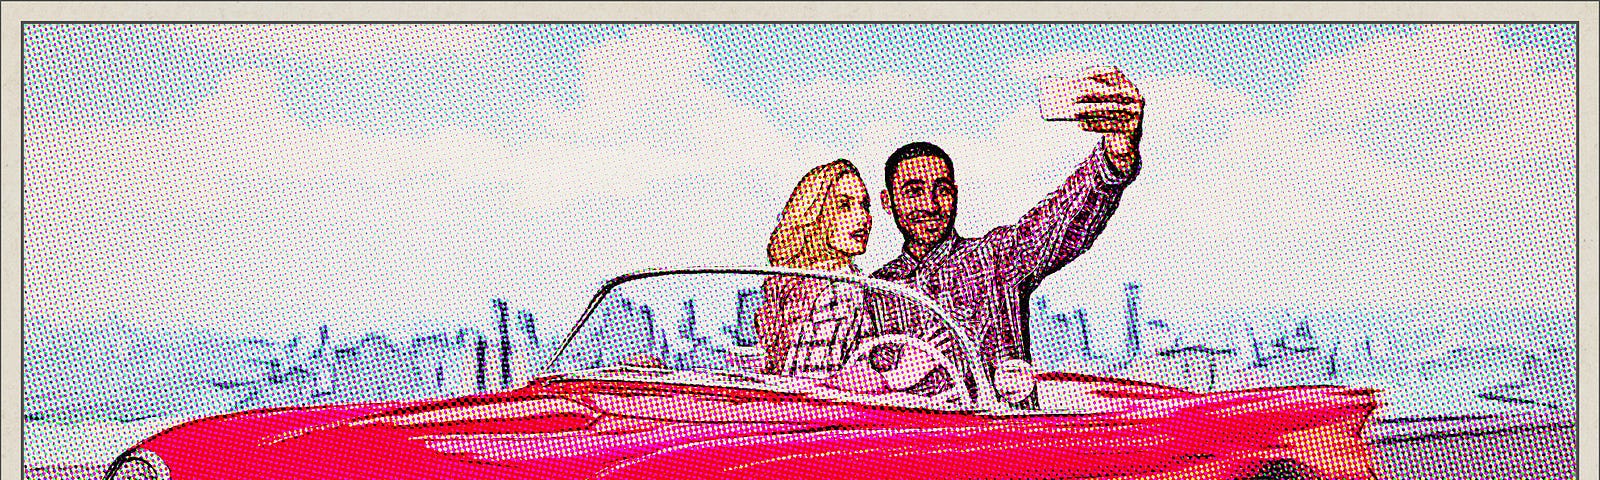 Couple takes selfie in speeding car